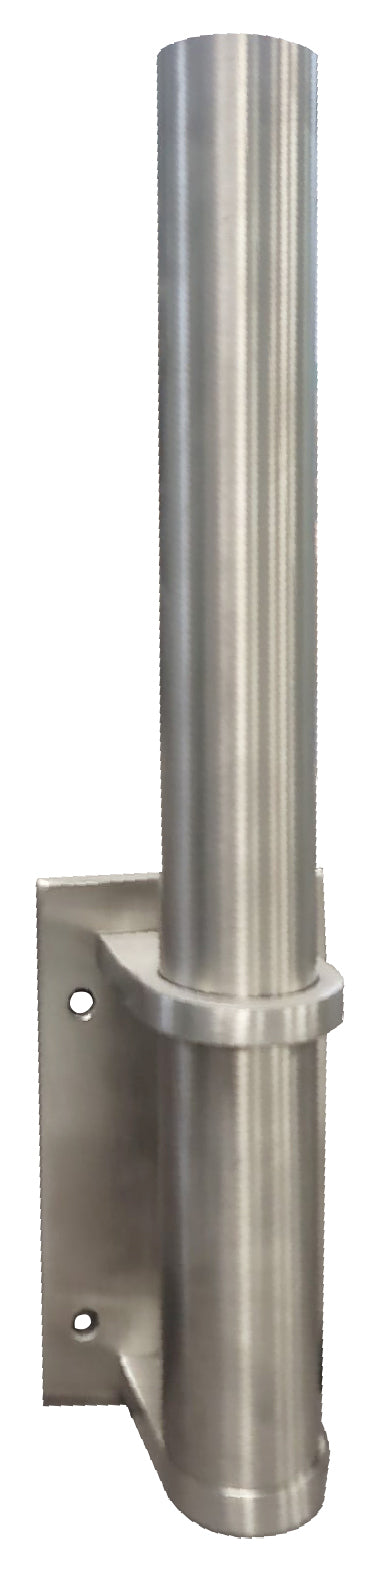 IGSIDEFLANGE424BS 拉丝不锈钢侧法兰，适用于圆管 42.4mm SS316